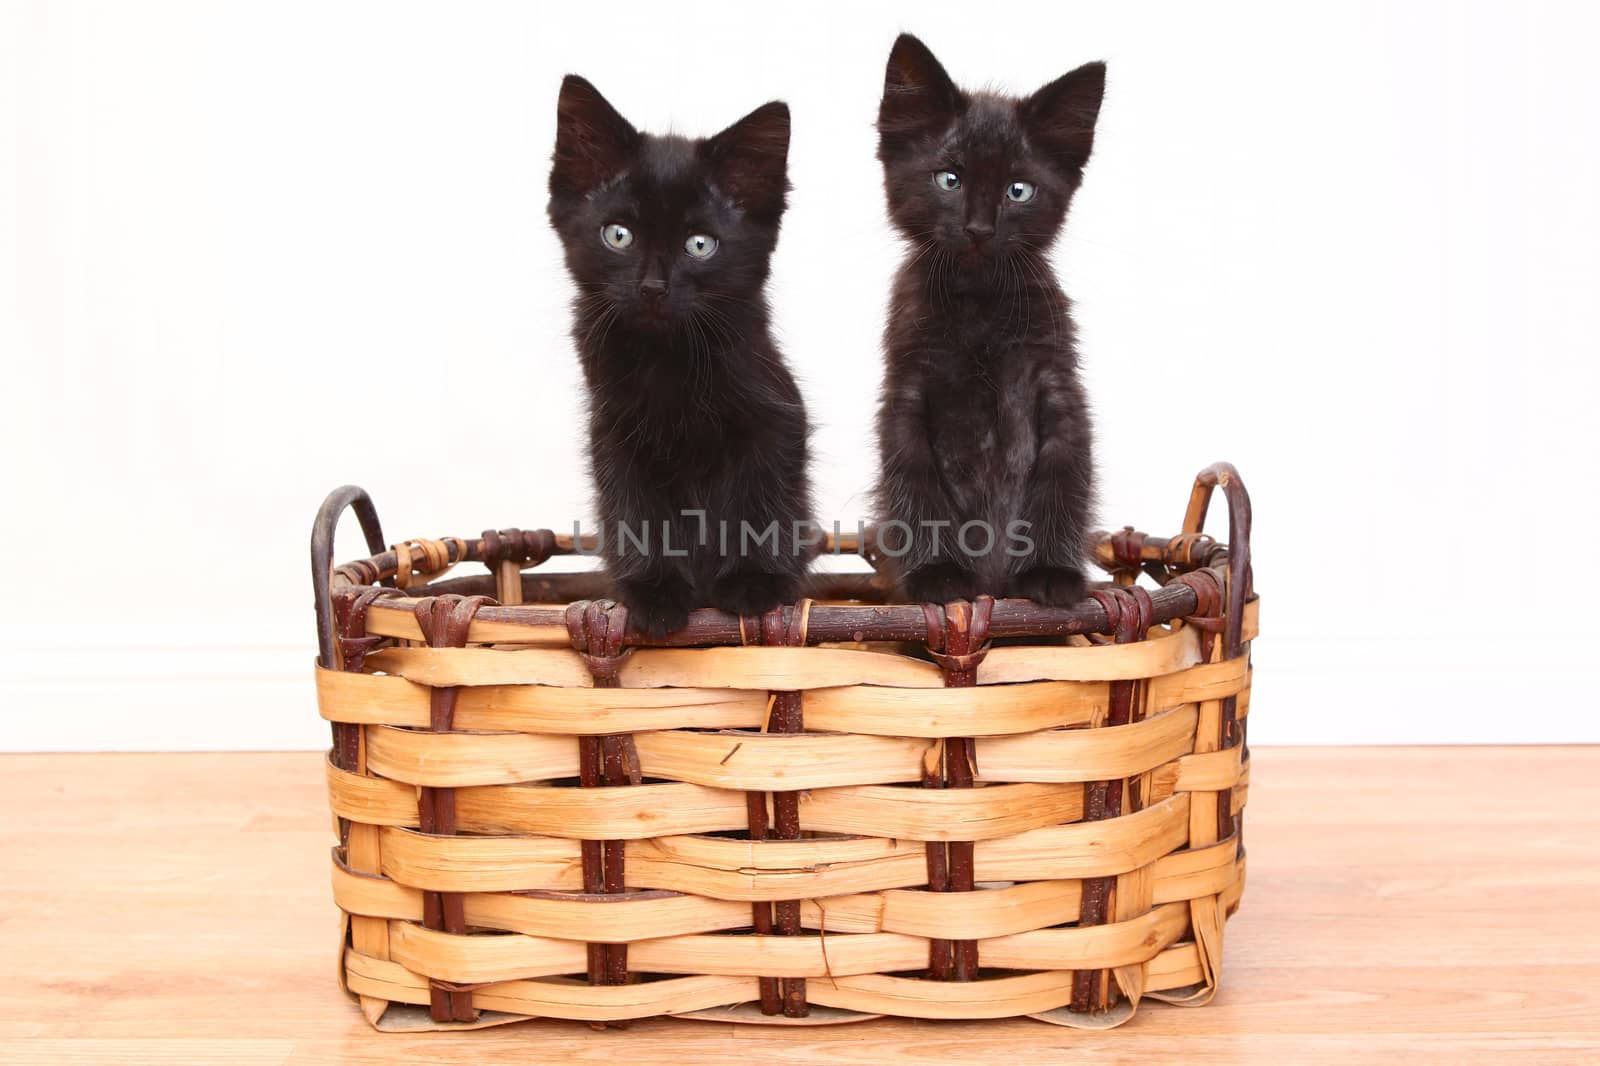 Adorable Kittens Inside a Basket on White